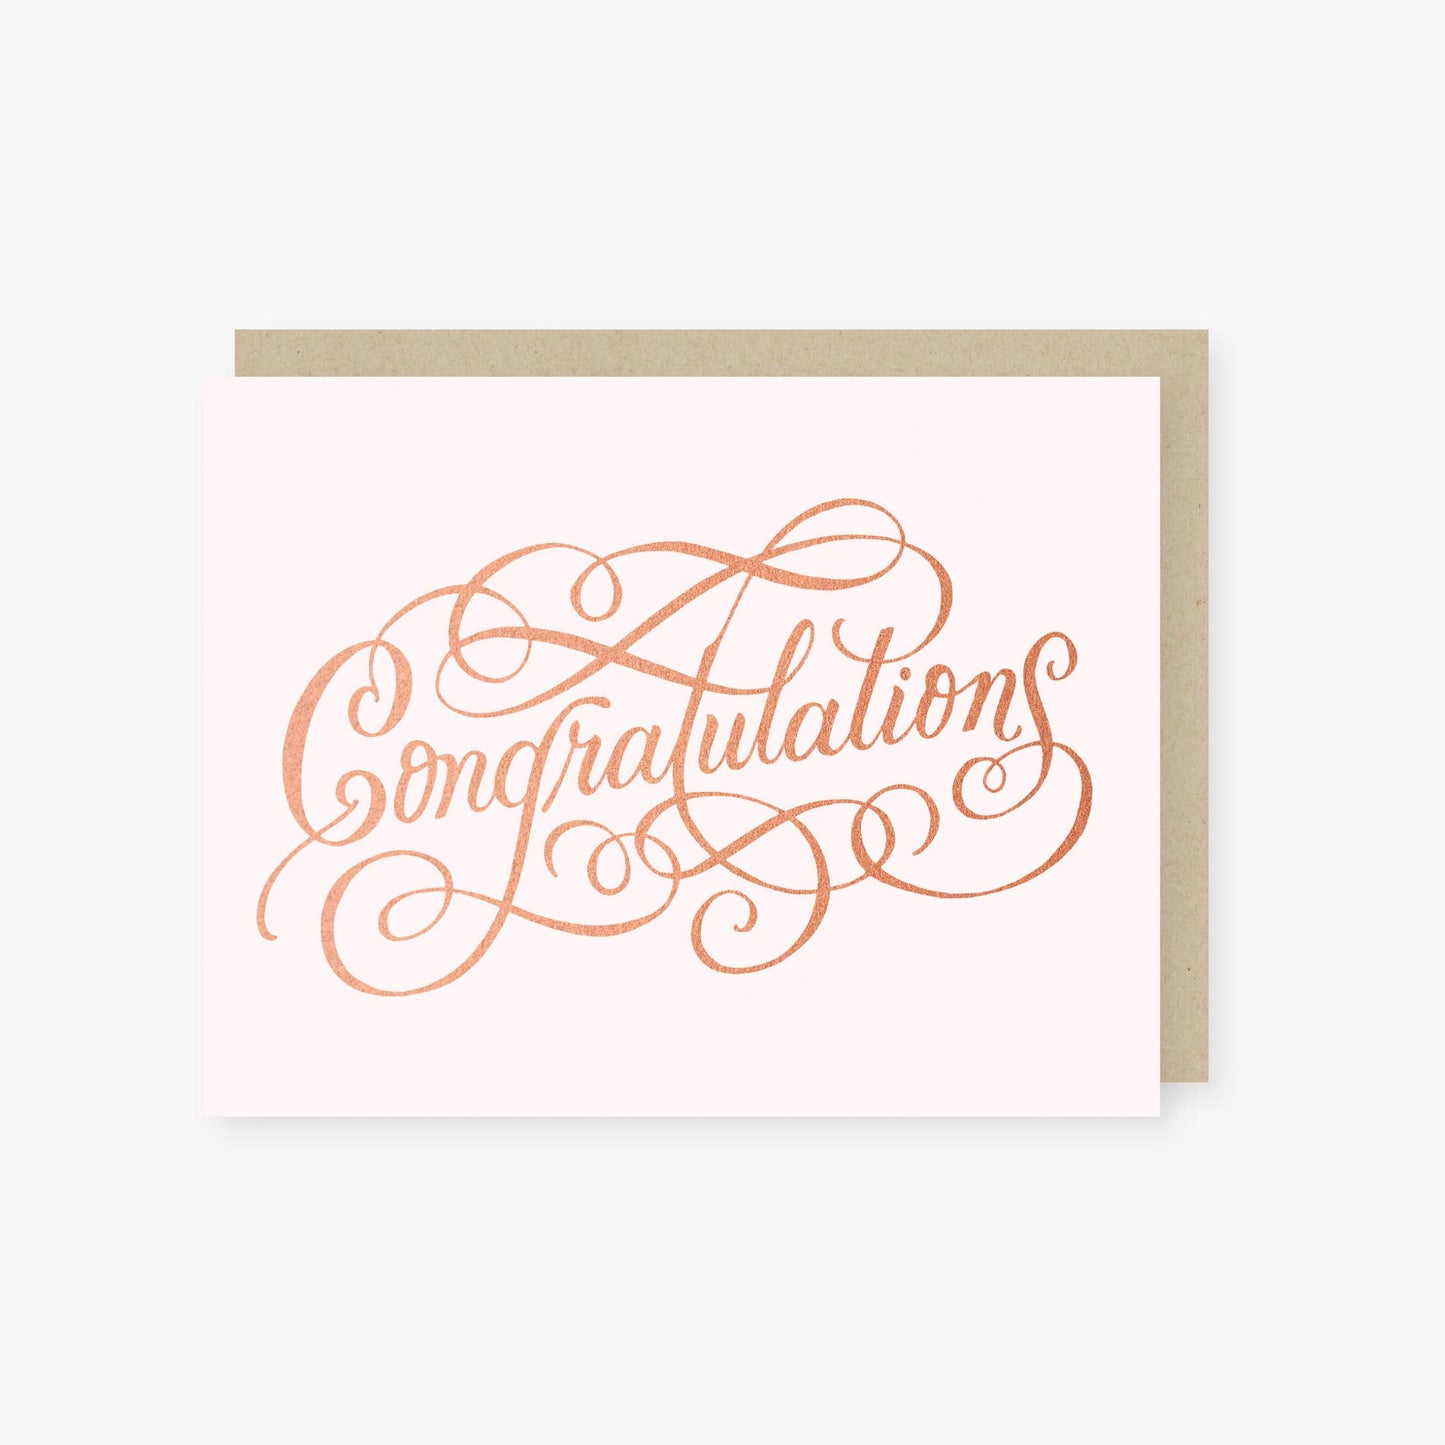 Congratulations Card; Rose Gold Foil